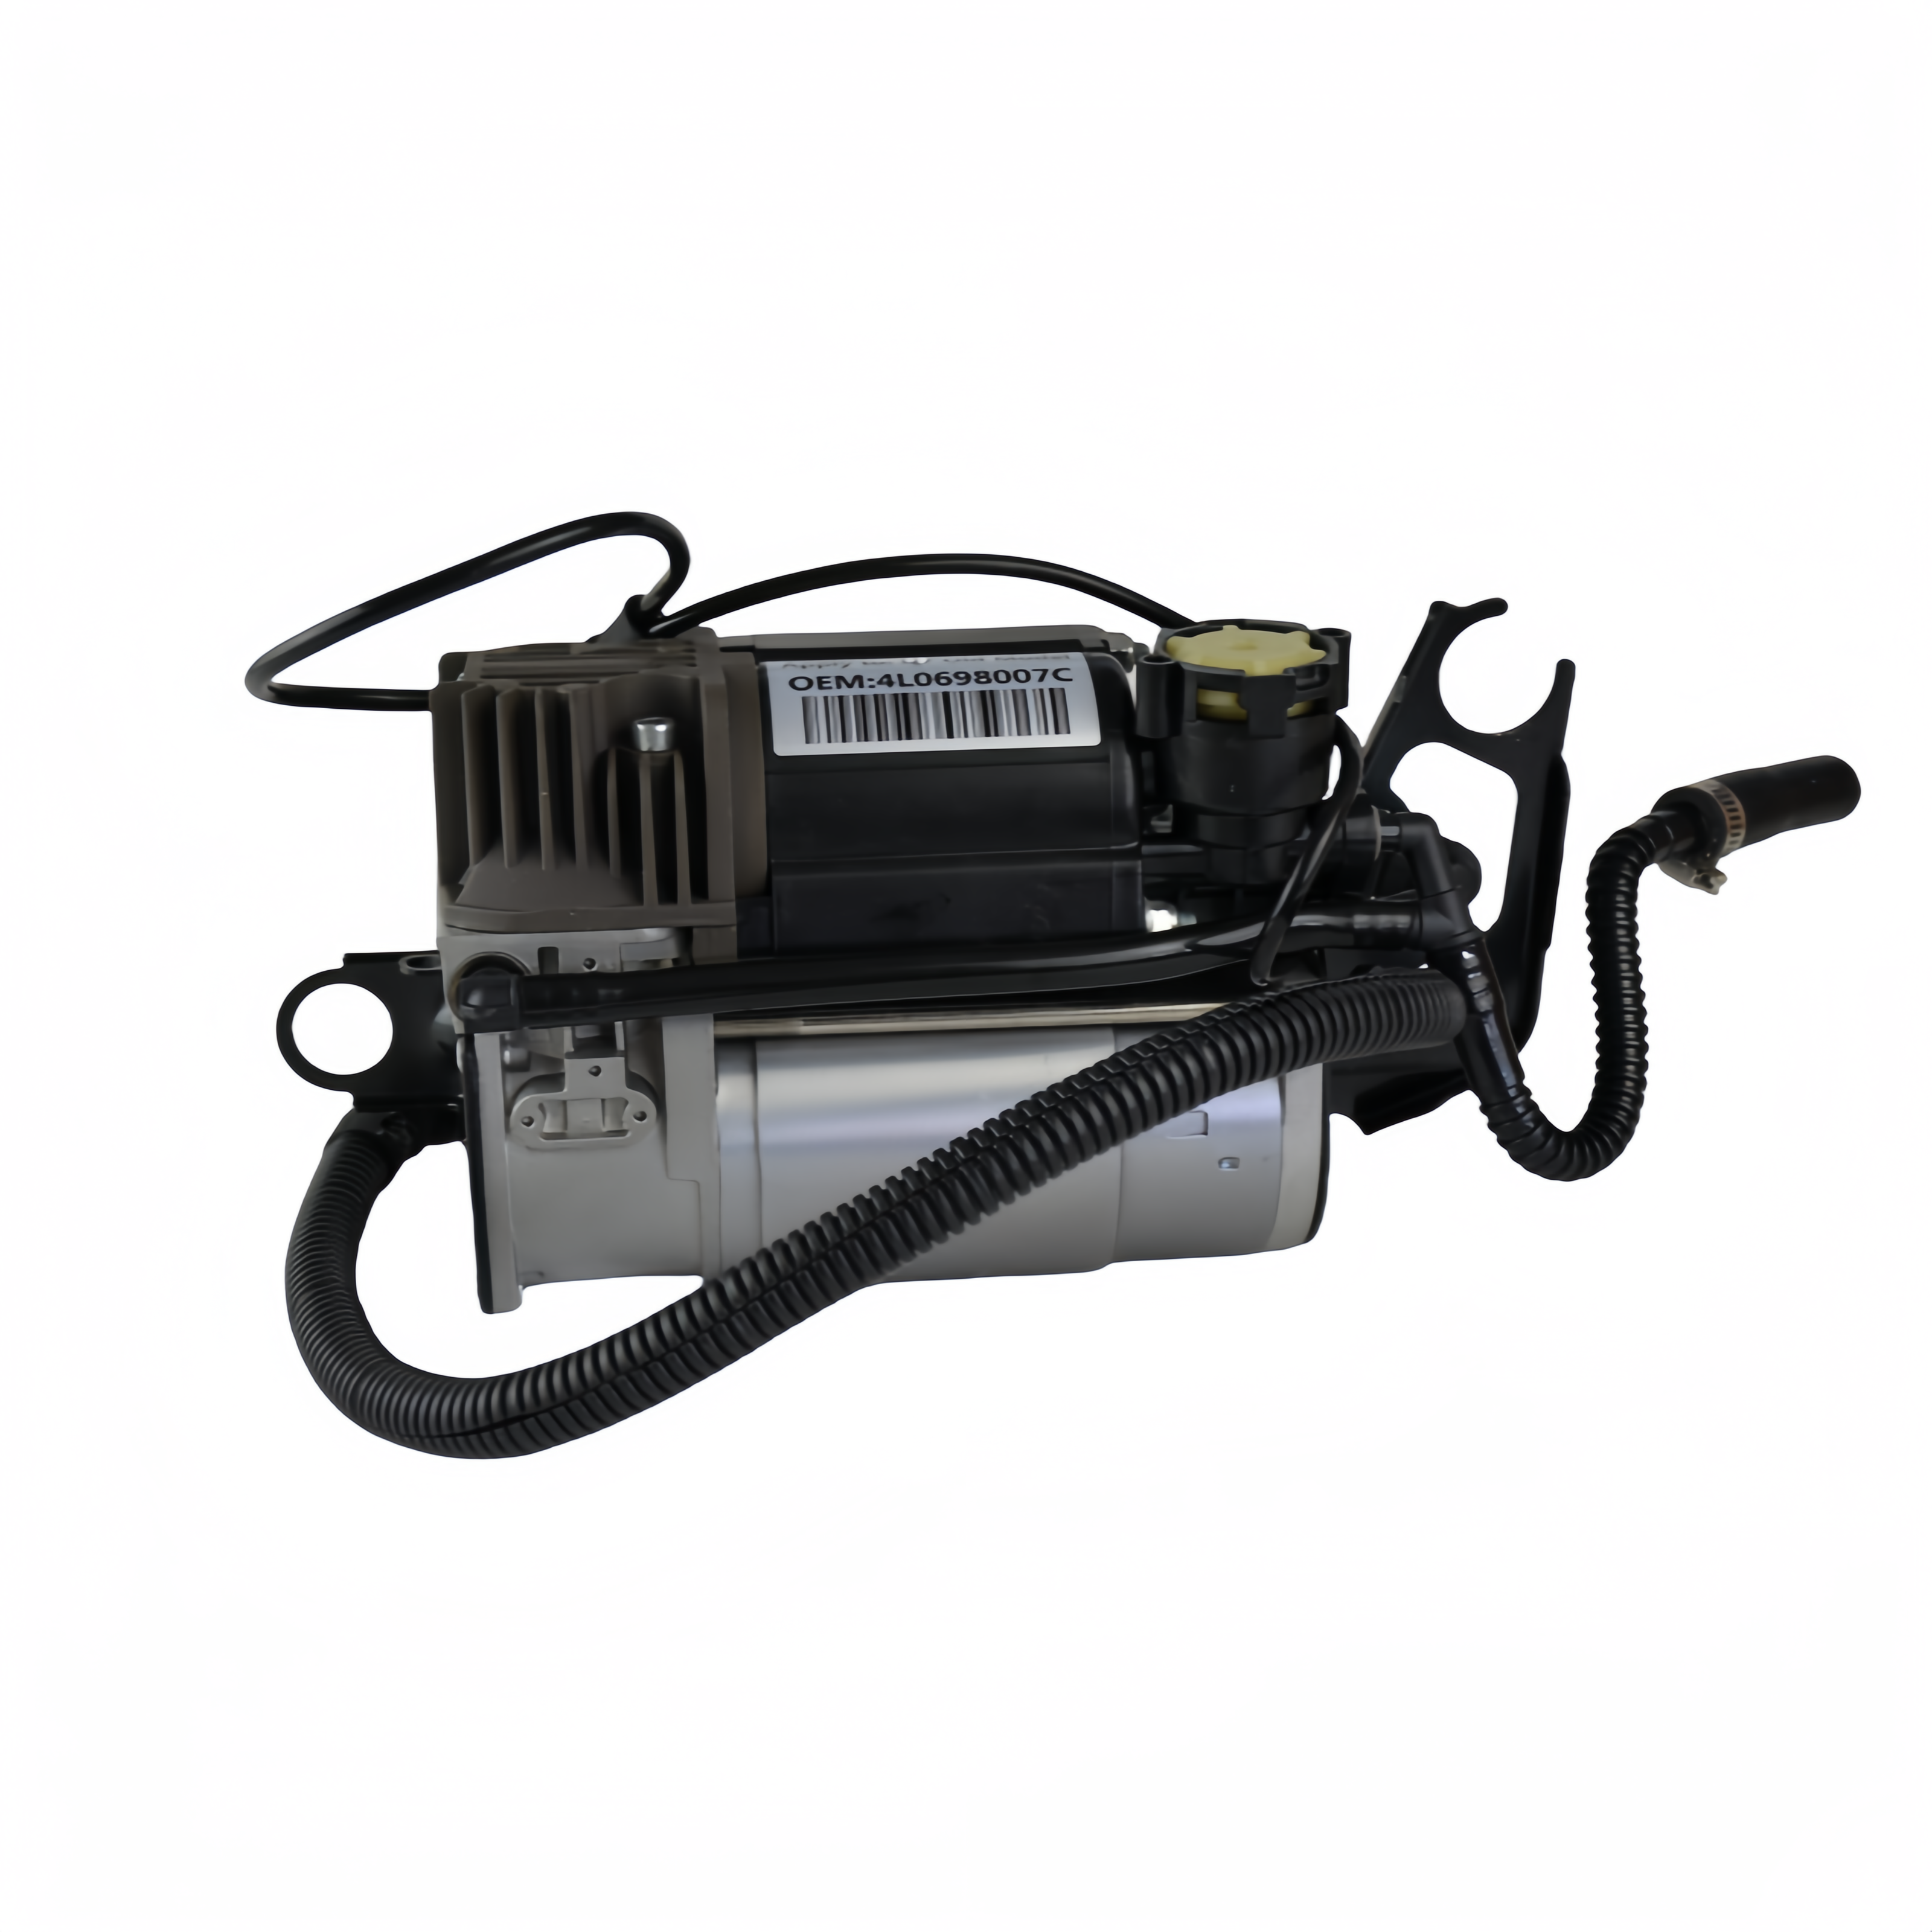 TITD China Supplier Air Suspension System Compressor Pump For AUDI Q7 4LB OEM# 4L0698007C